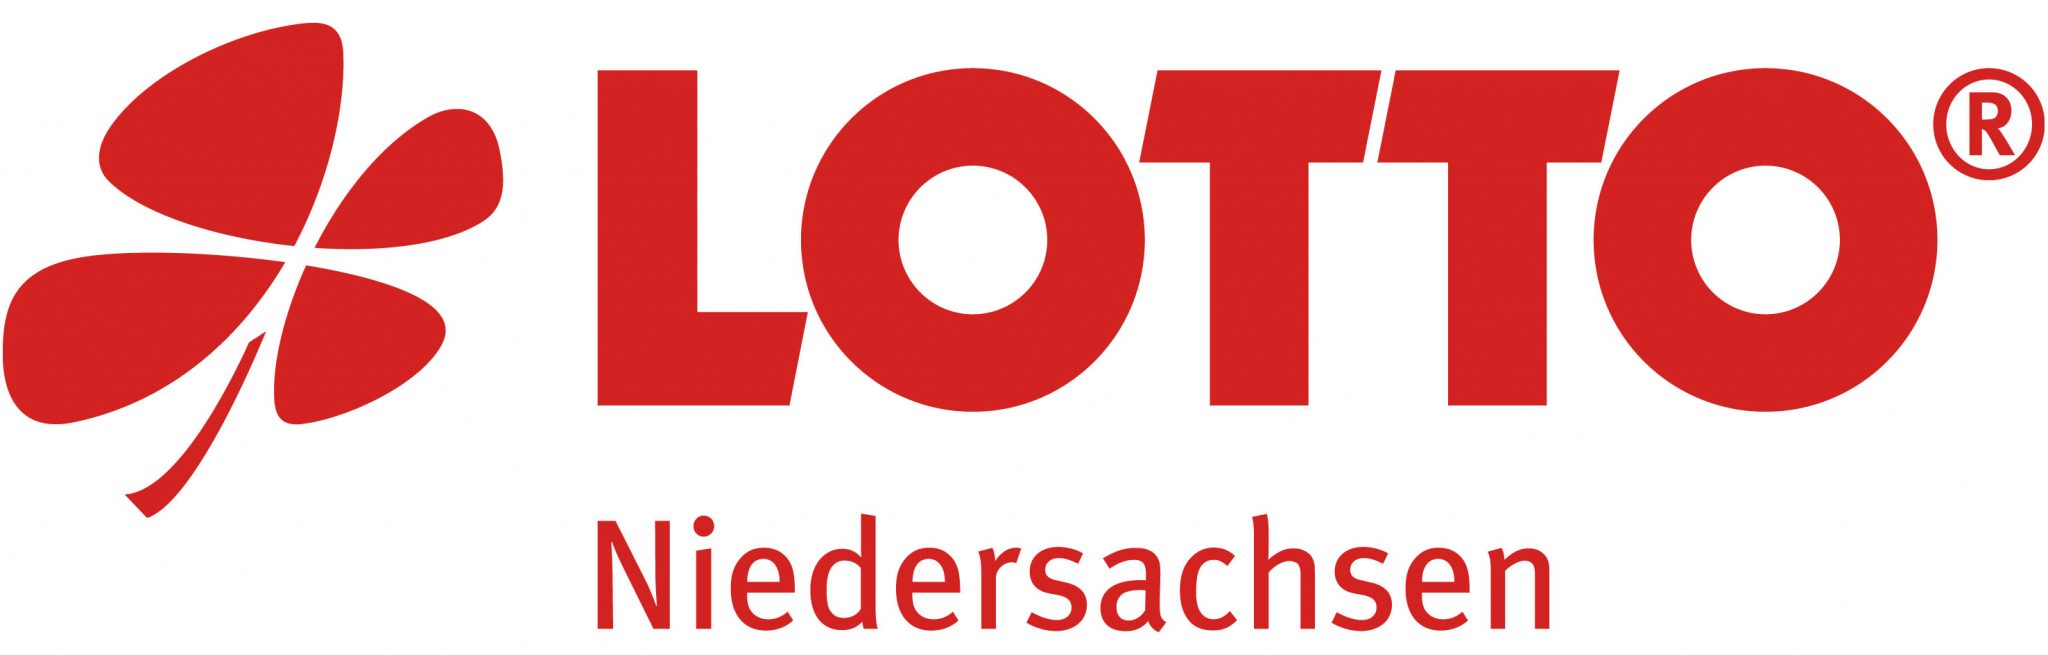 Toto Lotto Niedersachsen Logo